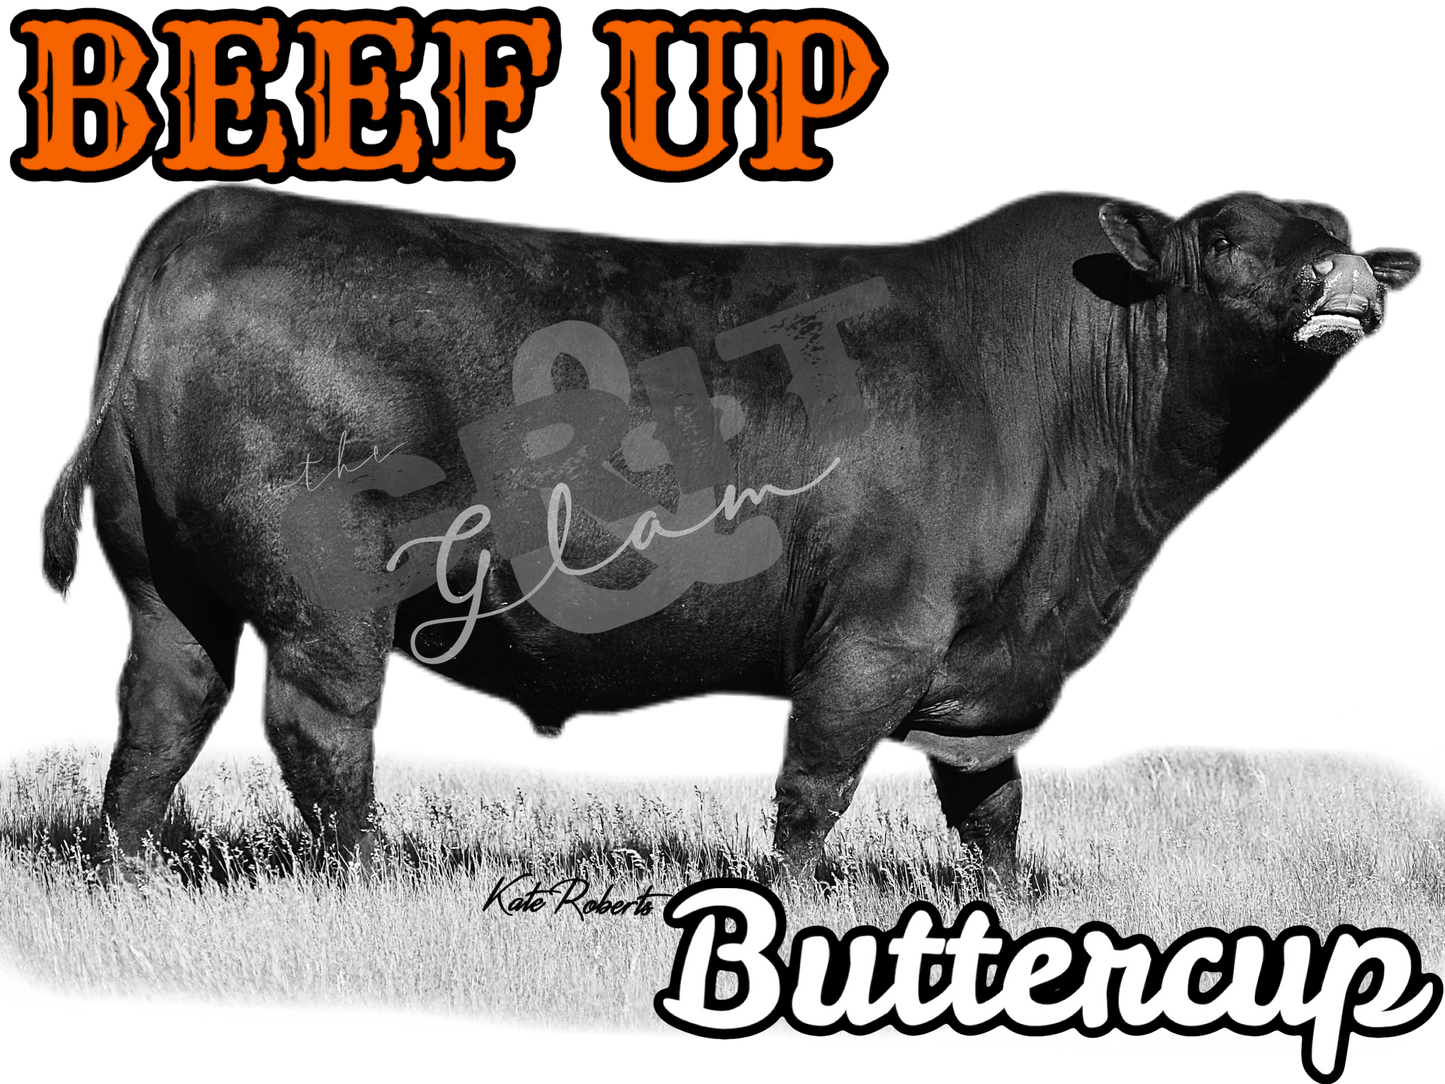 the |Beef Up| Buttercup onesie + tee